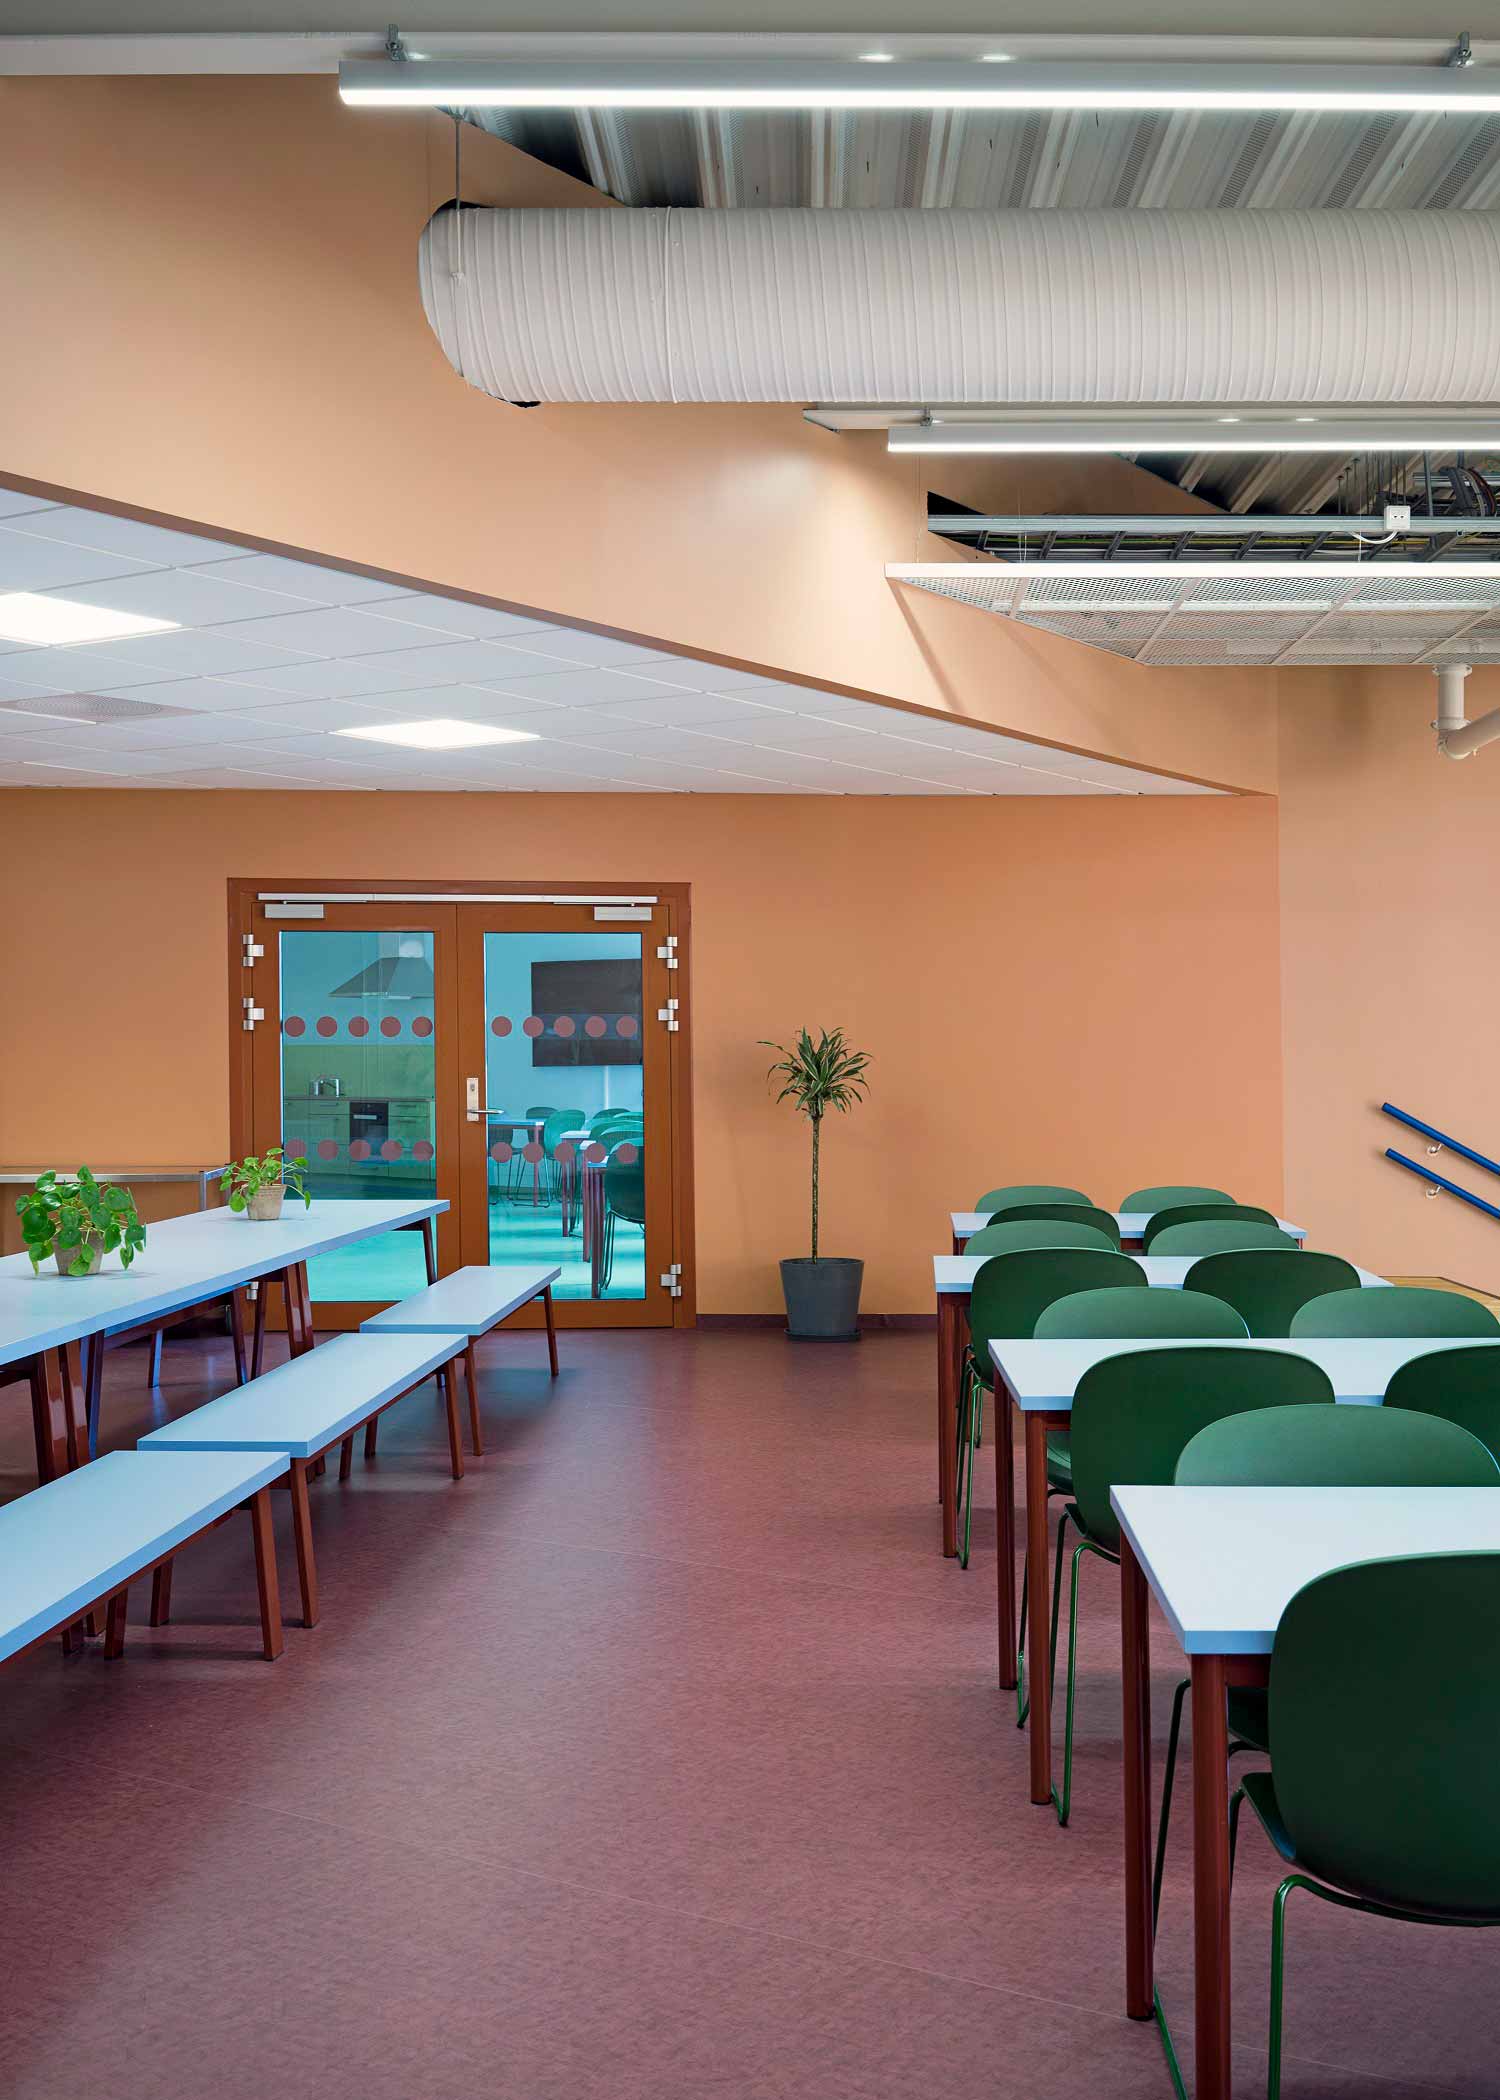 colourful ergonomic chairs in school canteen at Hebekk School, Norway